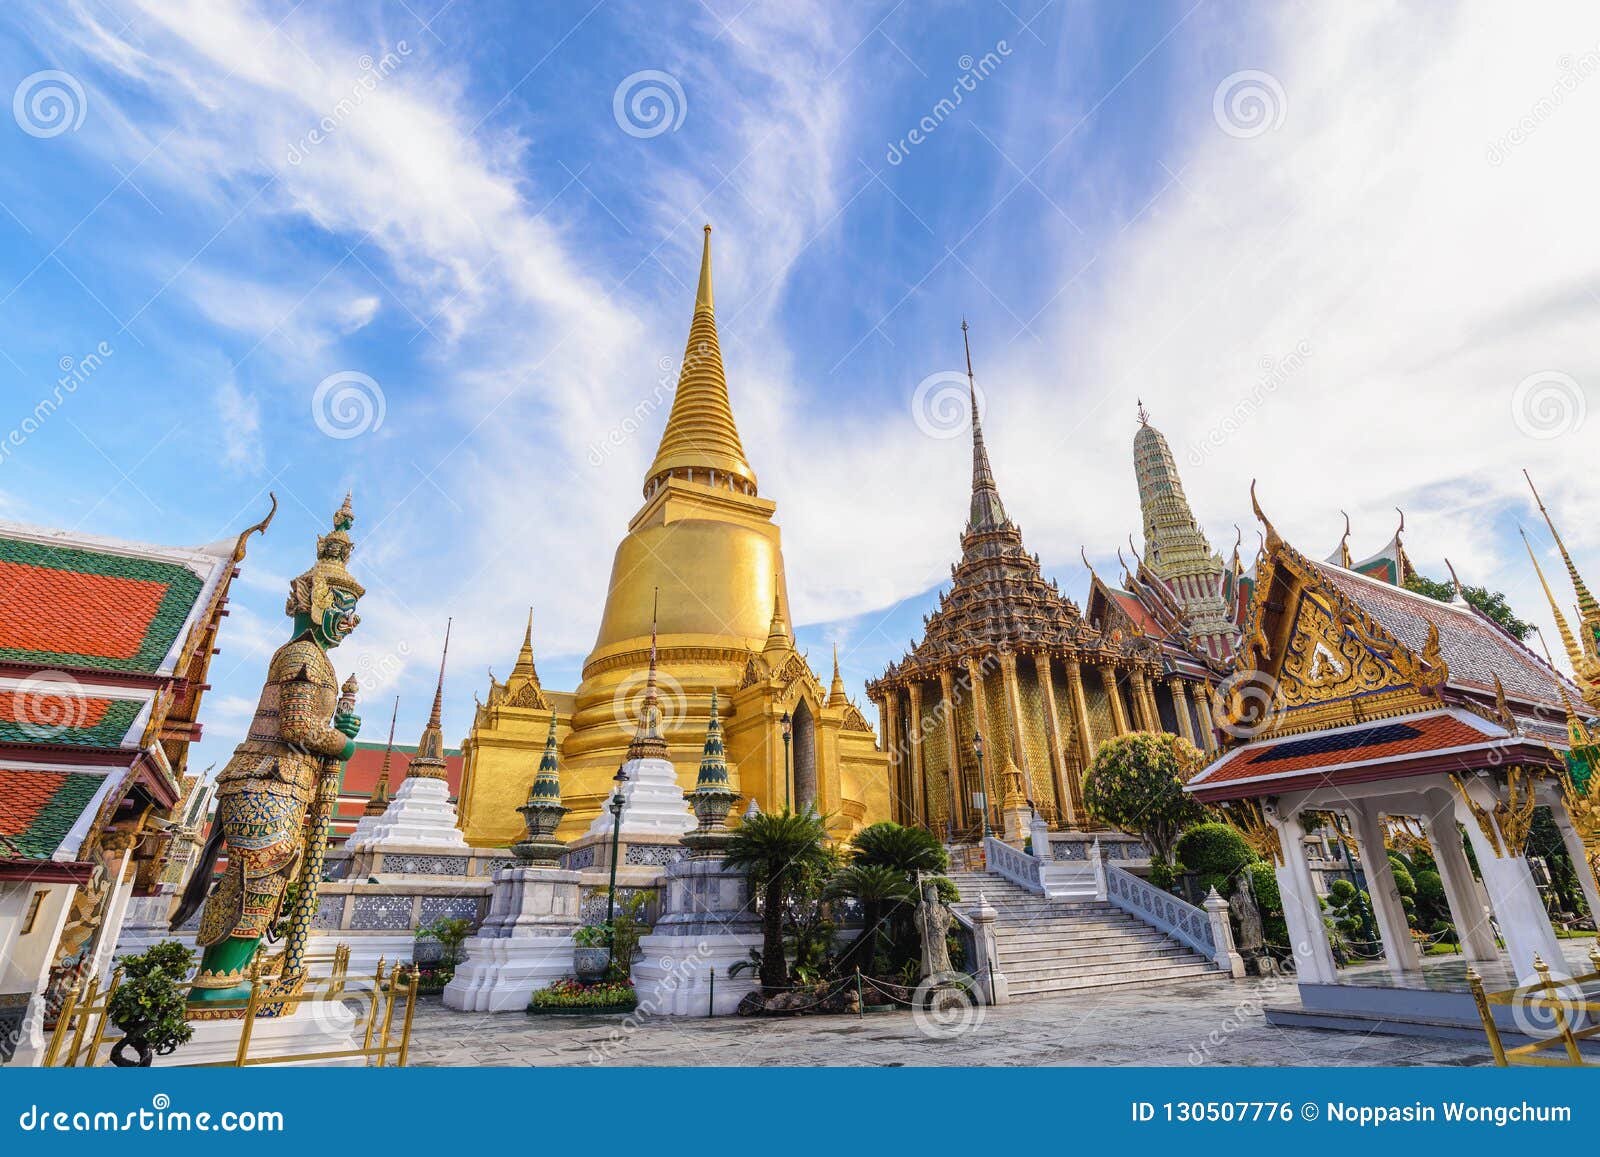 bangkok thailand wat phra kaew temple